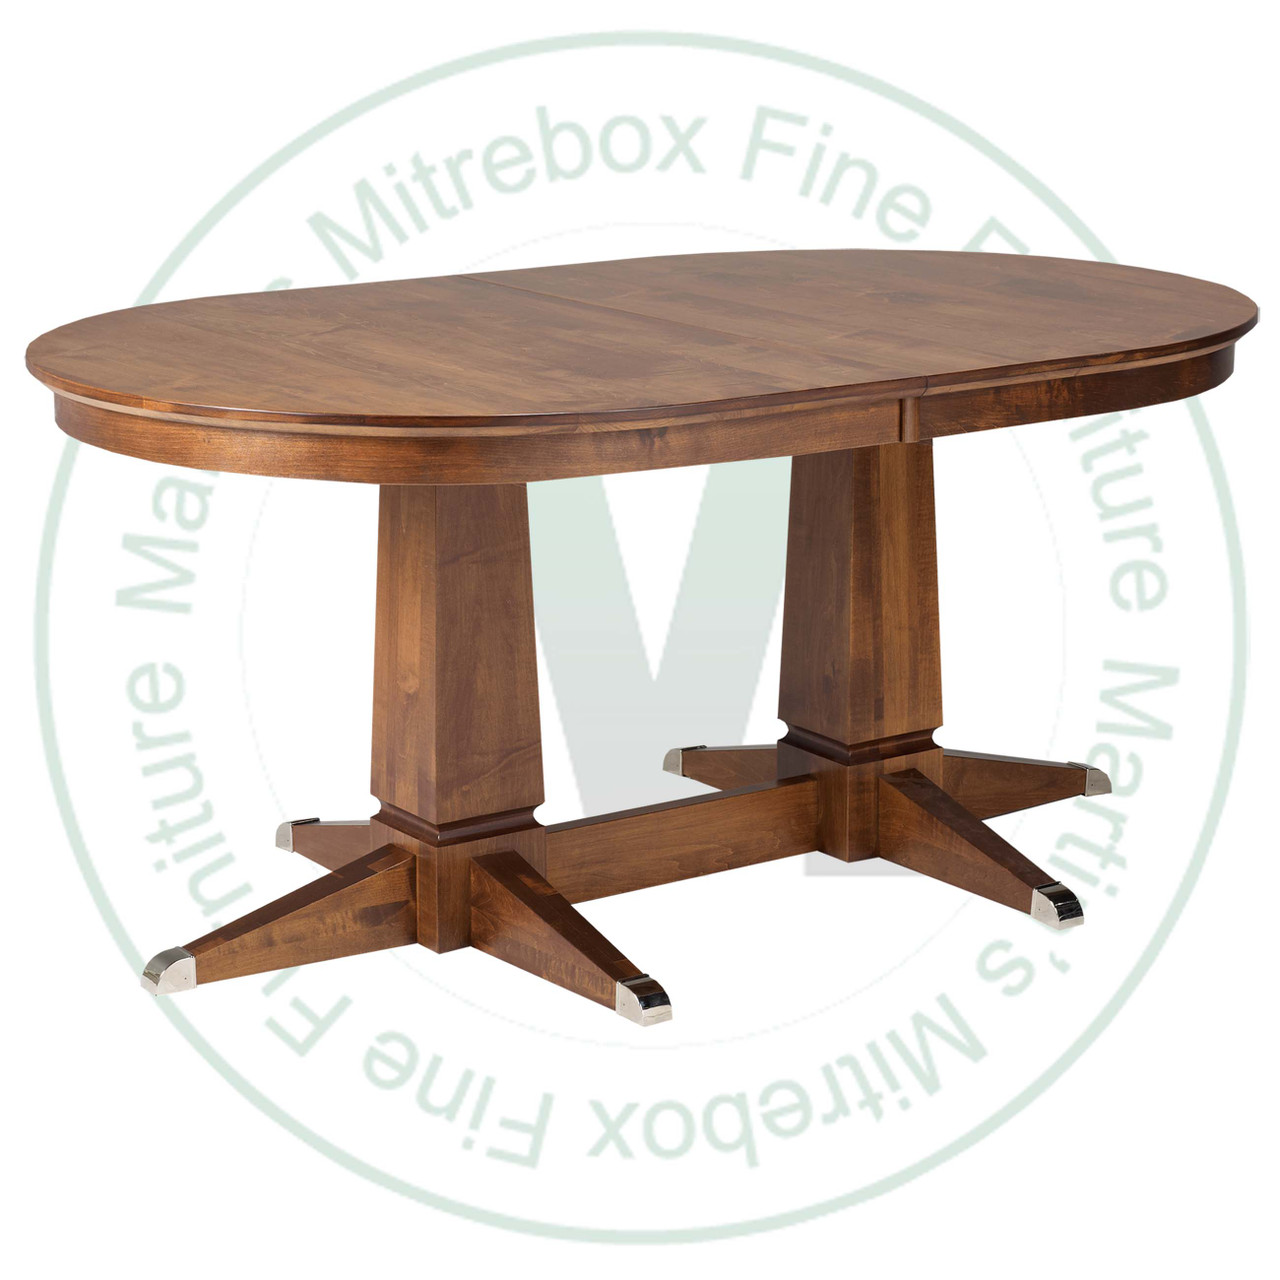 Oak Sweden Double Pedestal Table 42''D x 72''W x 30''H With 3 - 12'' Leaves